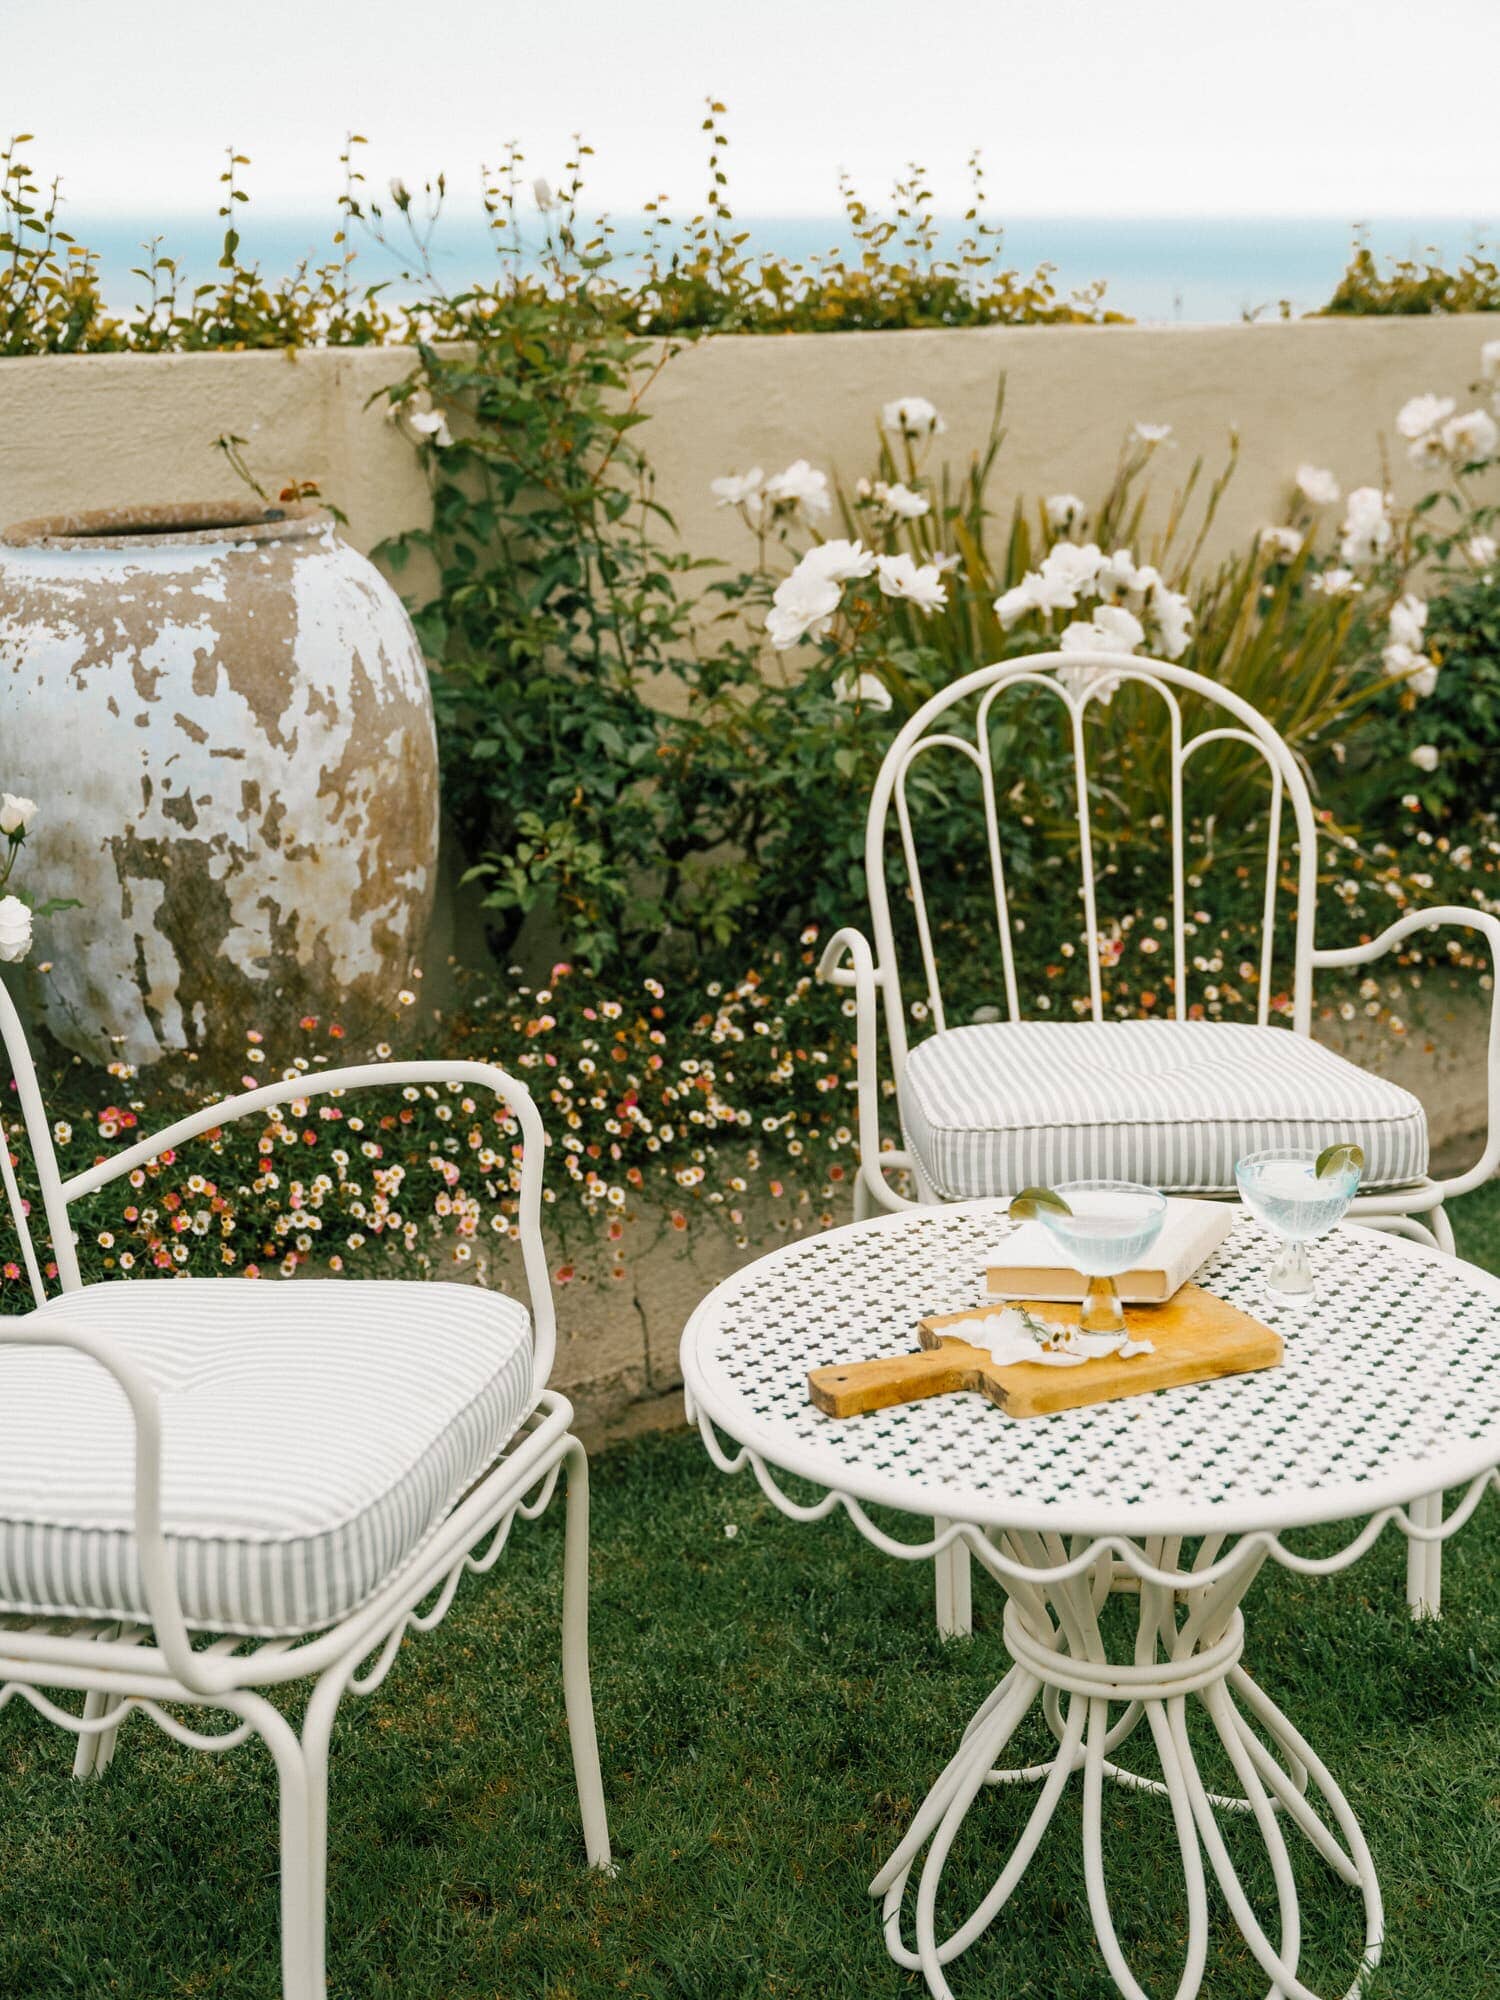 Sage al fresco cushions on chairs in a garden